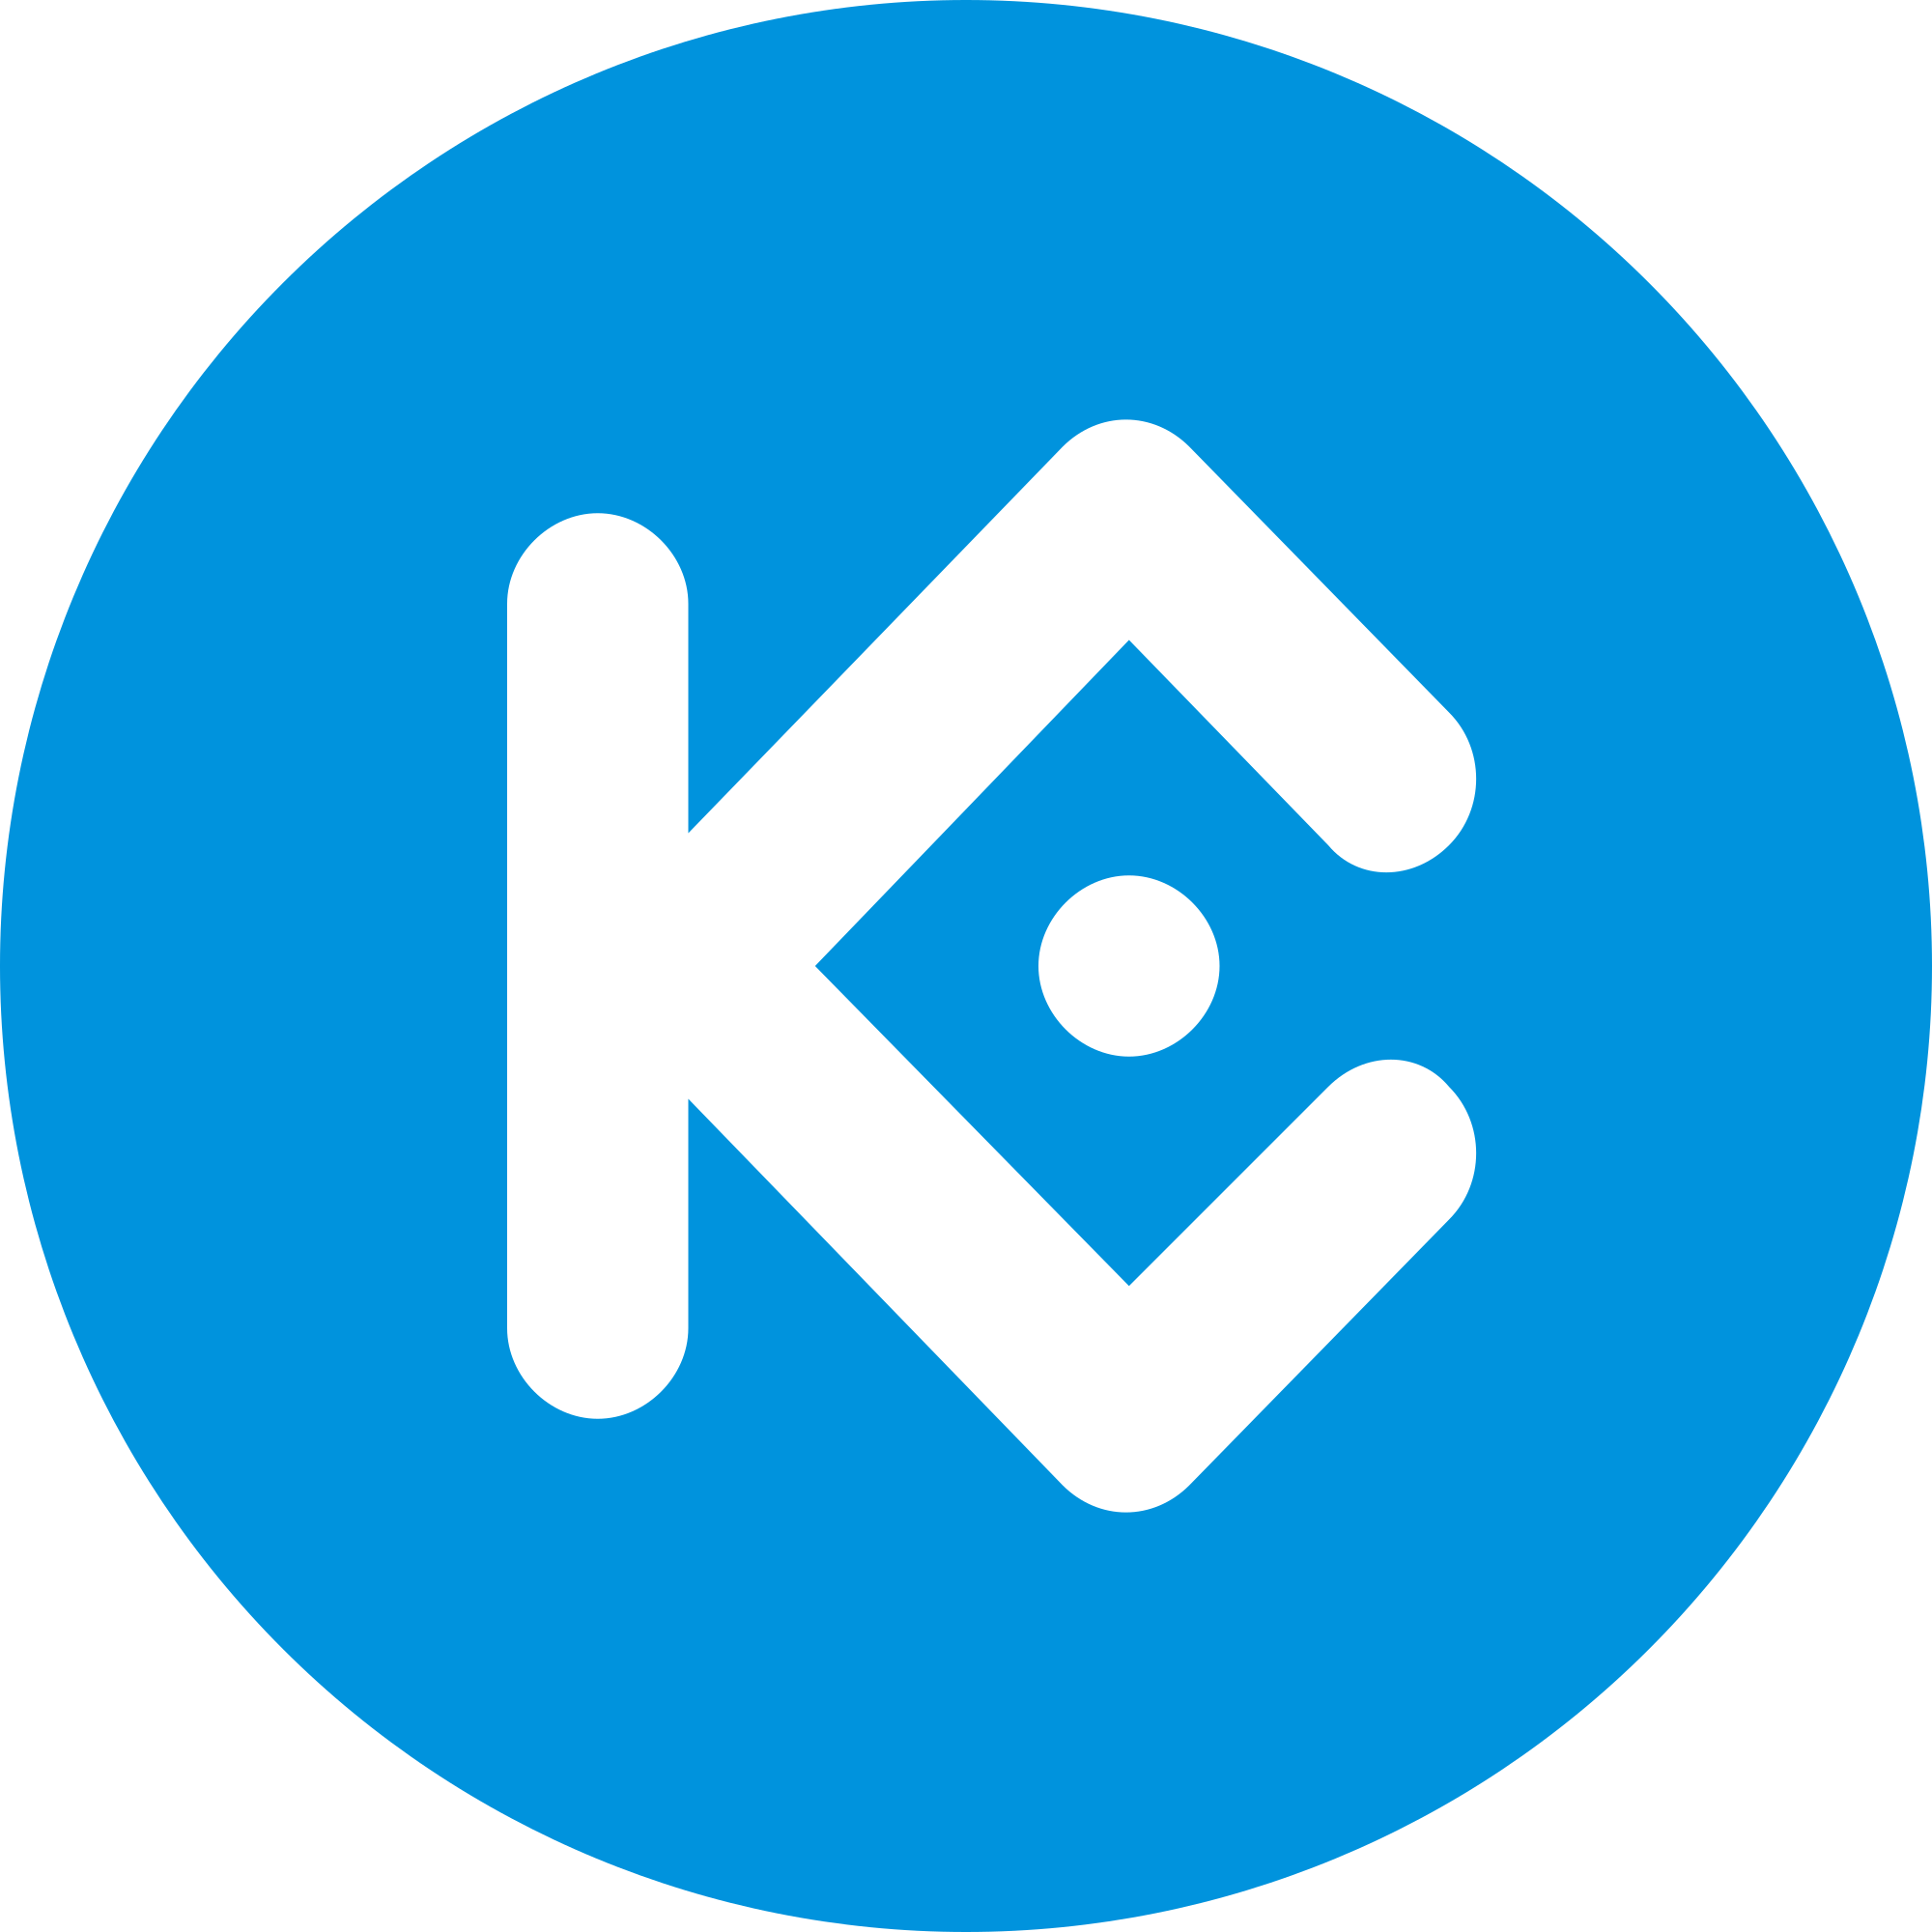 KCS Vector Logo - Download Free SVG Icon | Worldvectorlogo